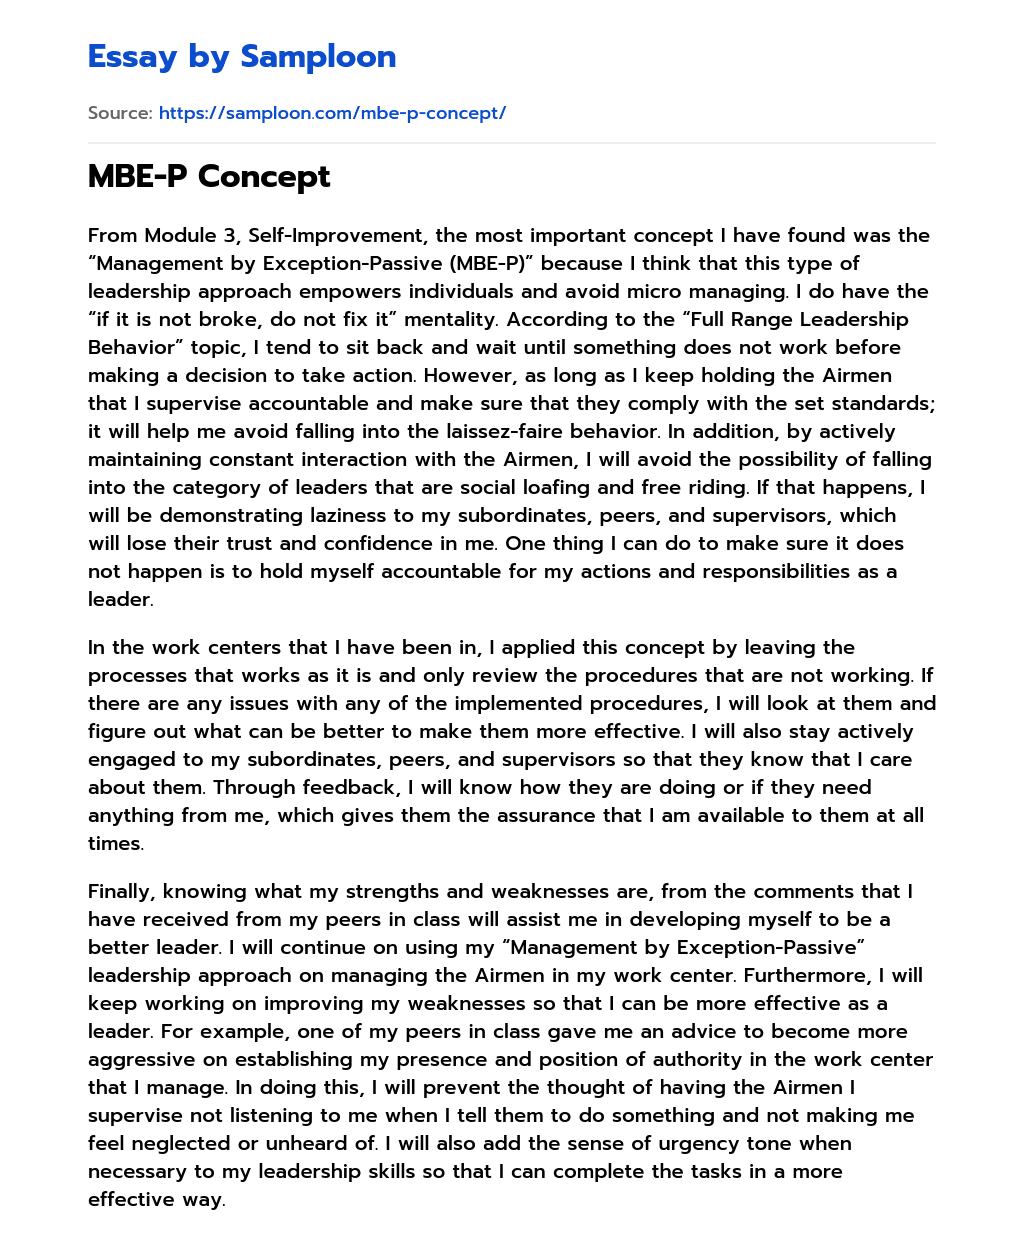 MBE-P Concept essay